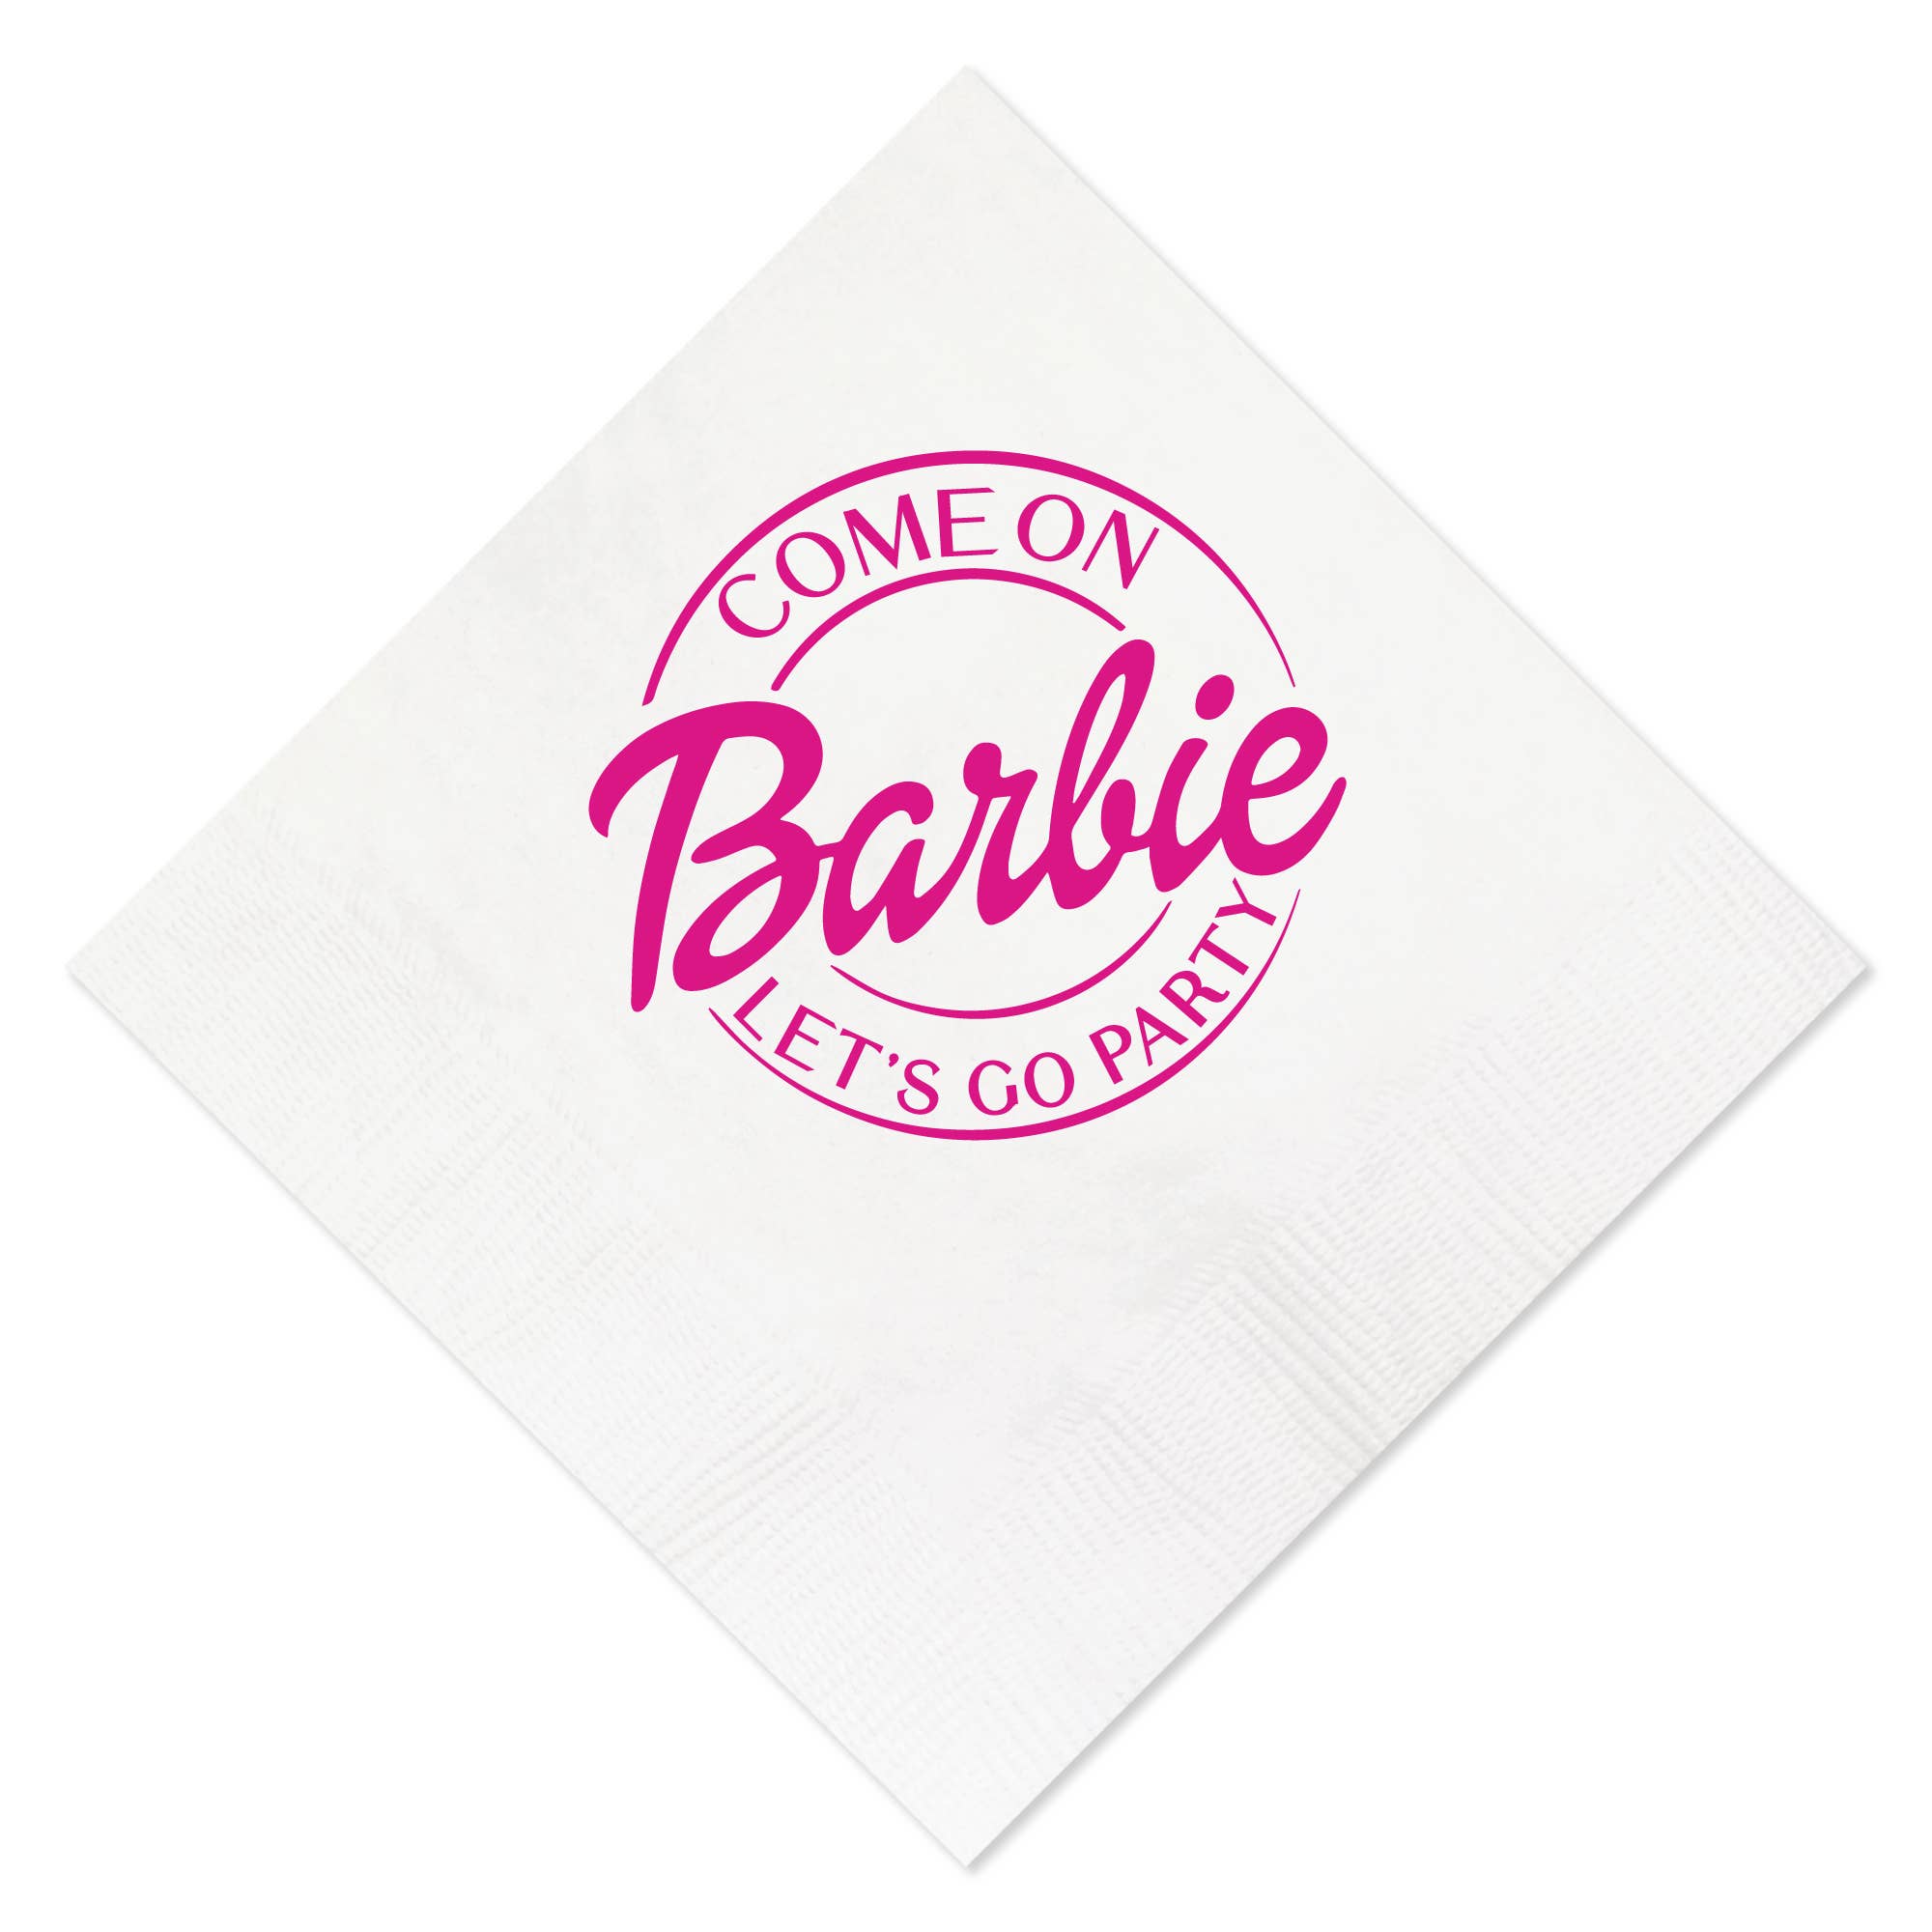 Come on Barbie Let's Go Party - Cocktail Napkins